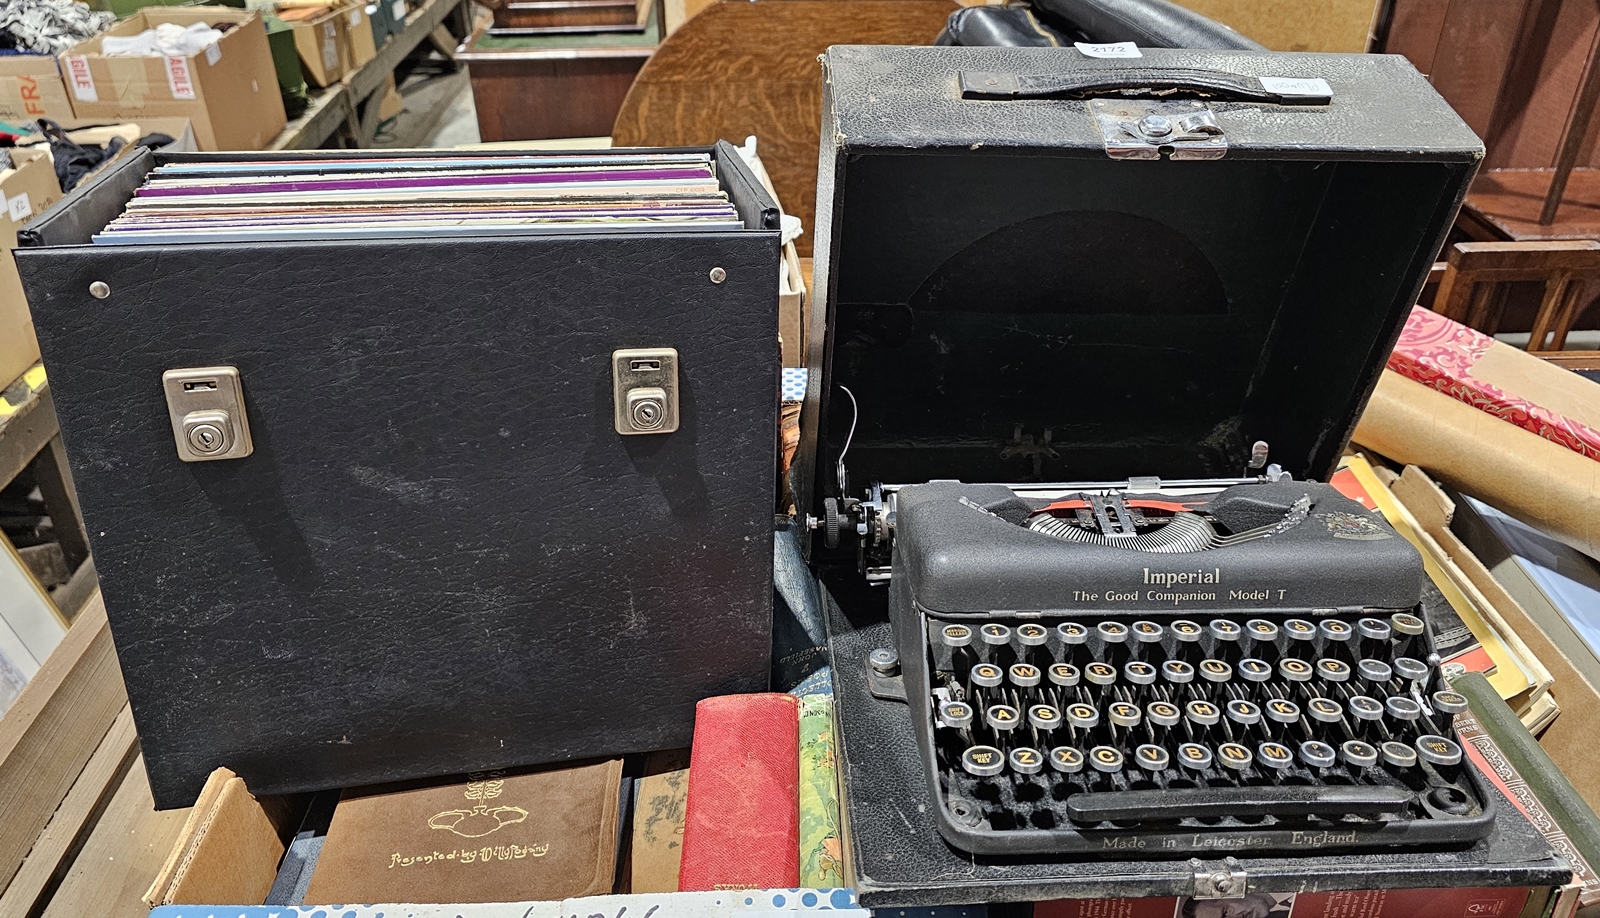 Imperial Model-T cased typewriter.